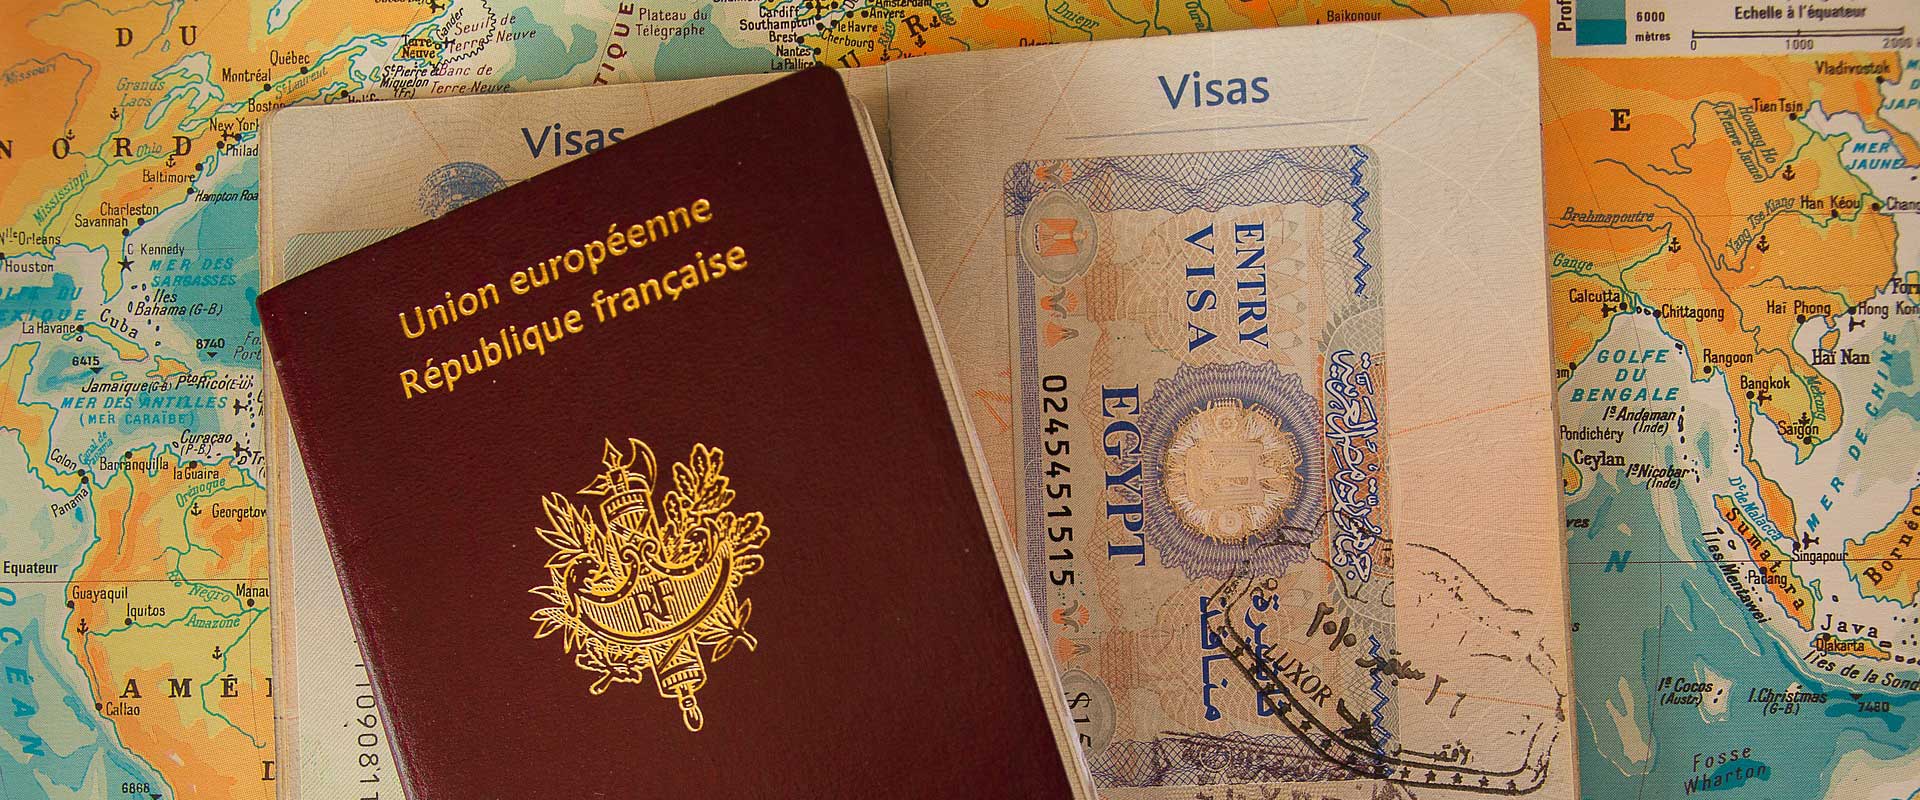 easy vietnam visa made by Hanoi Voyages